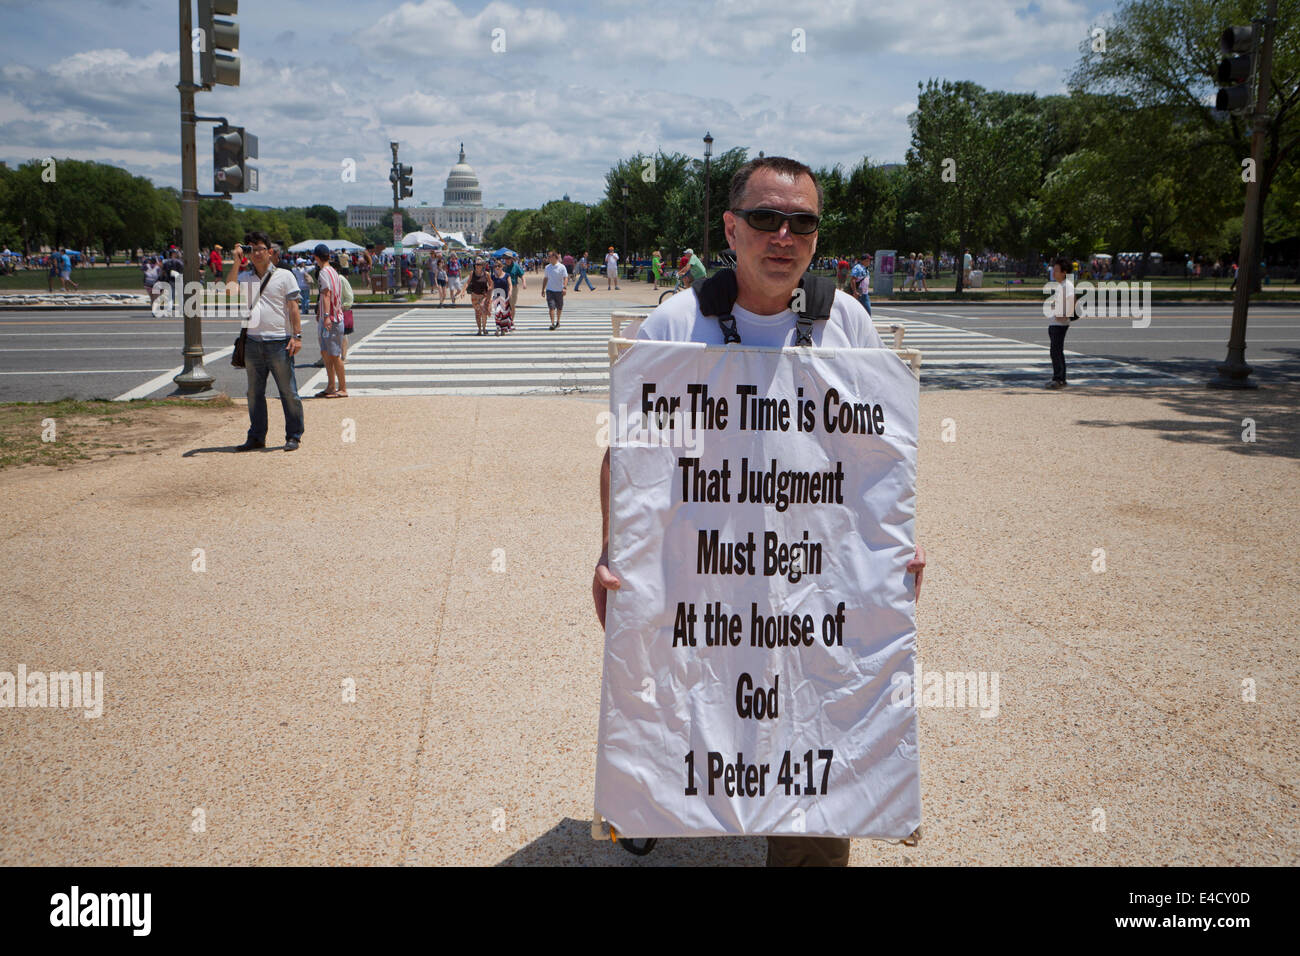 Street evangelist wearing Christian message sign - Washington, DC USA Stock Photo